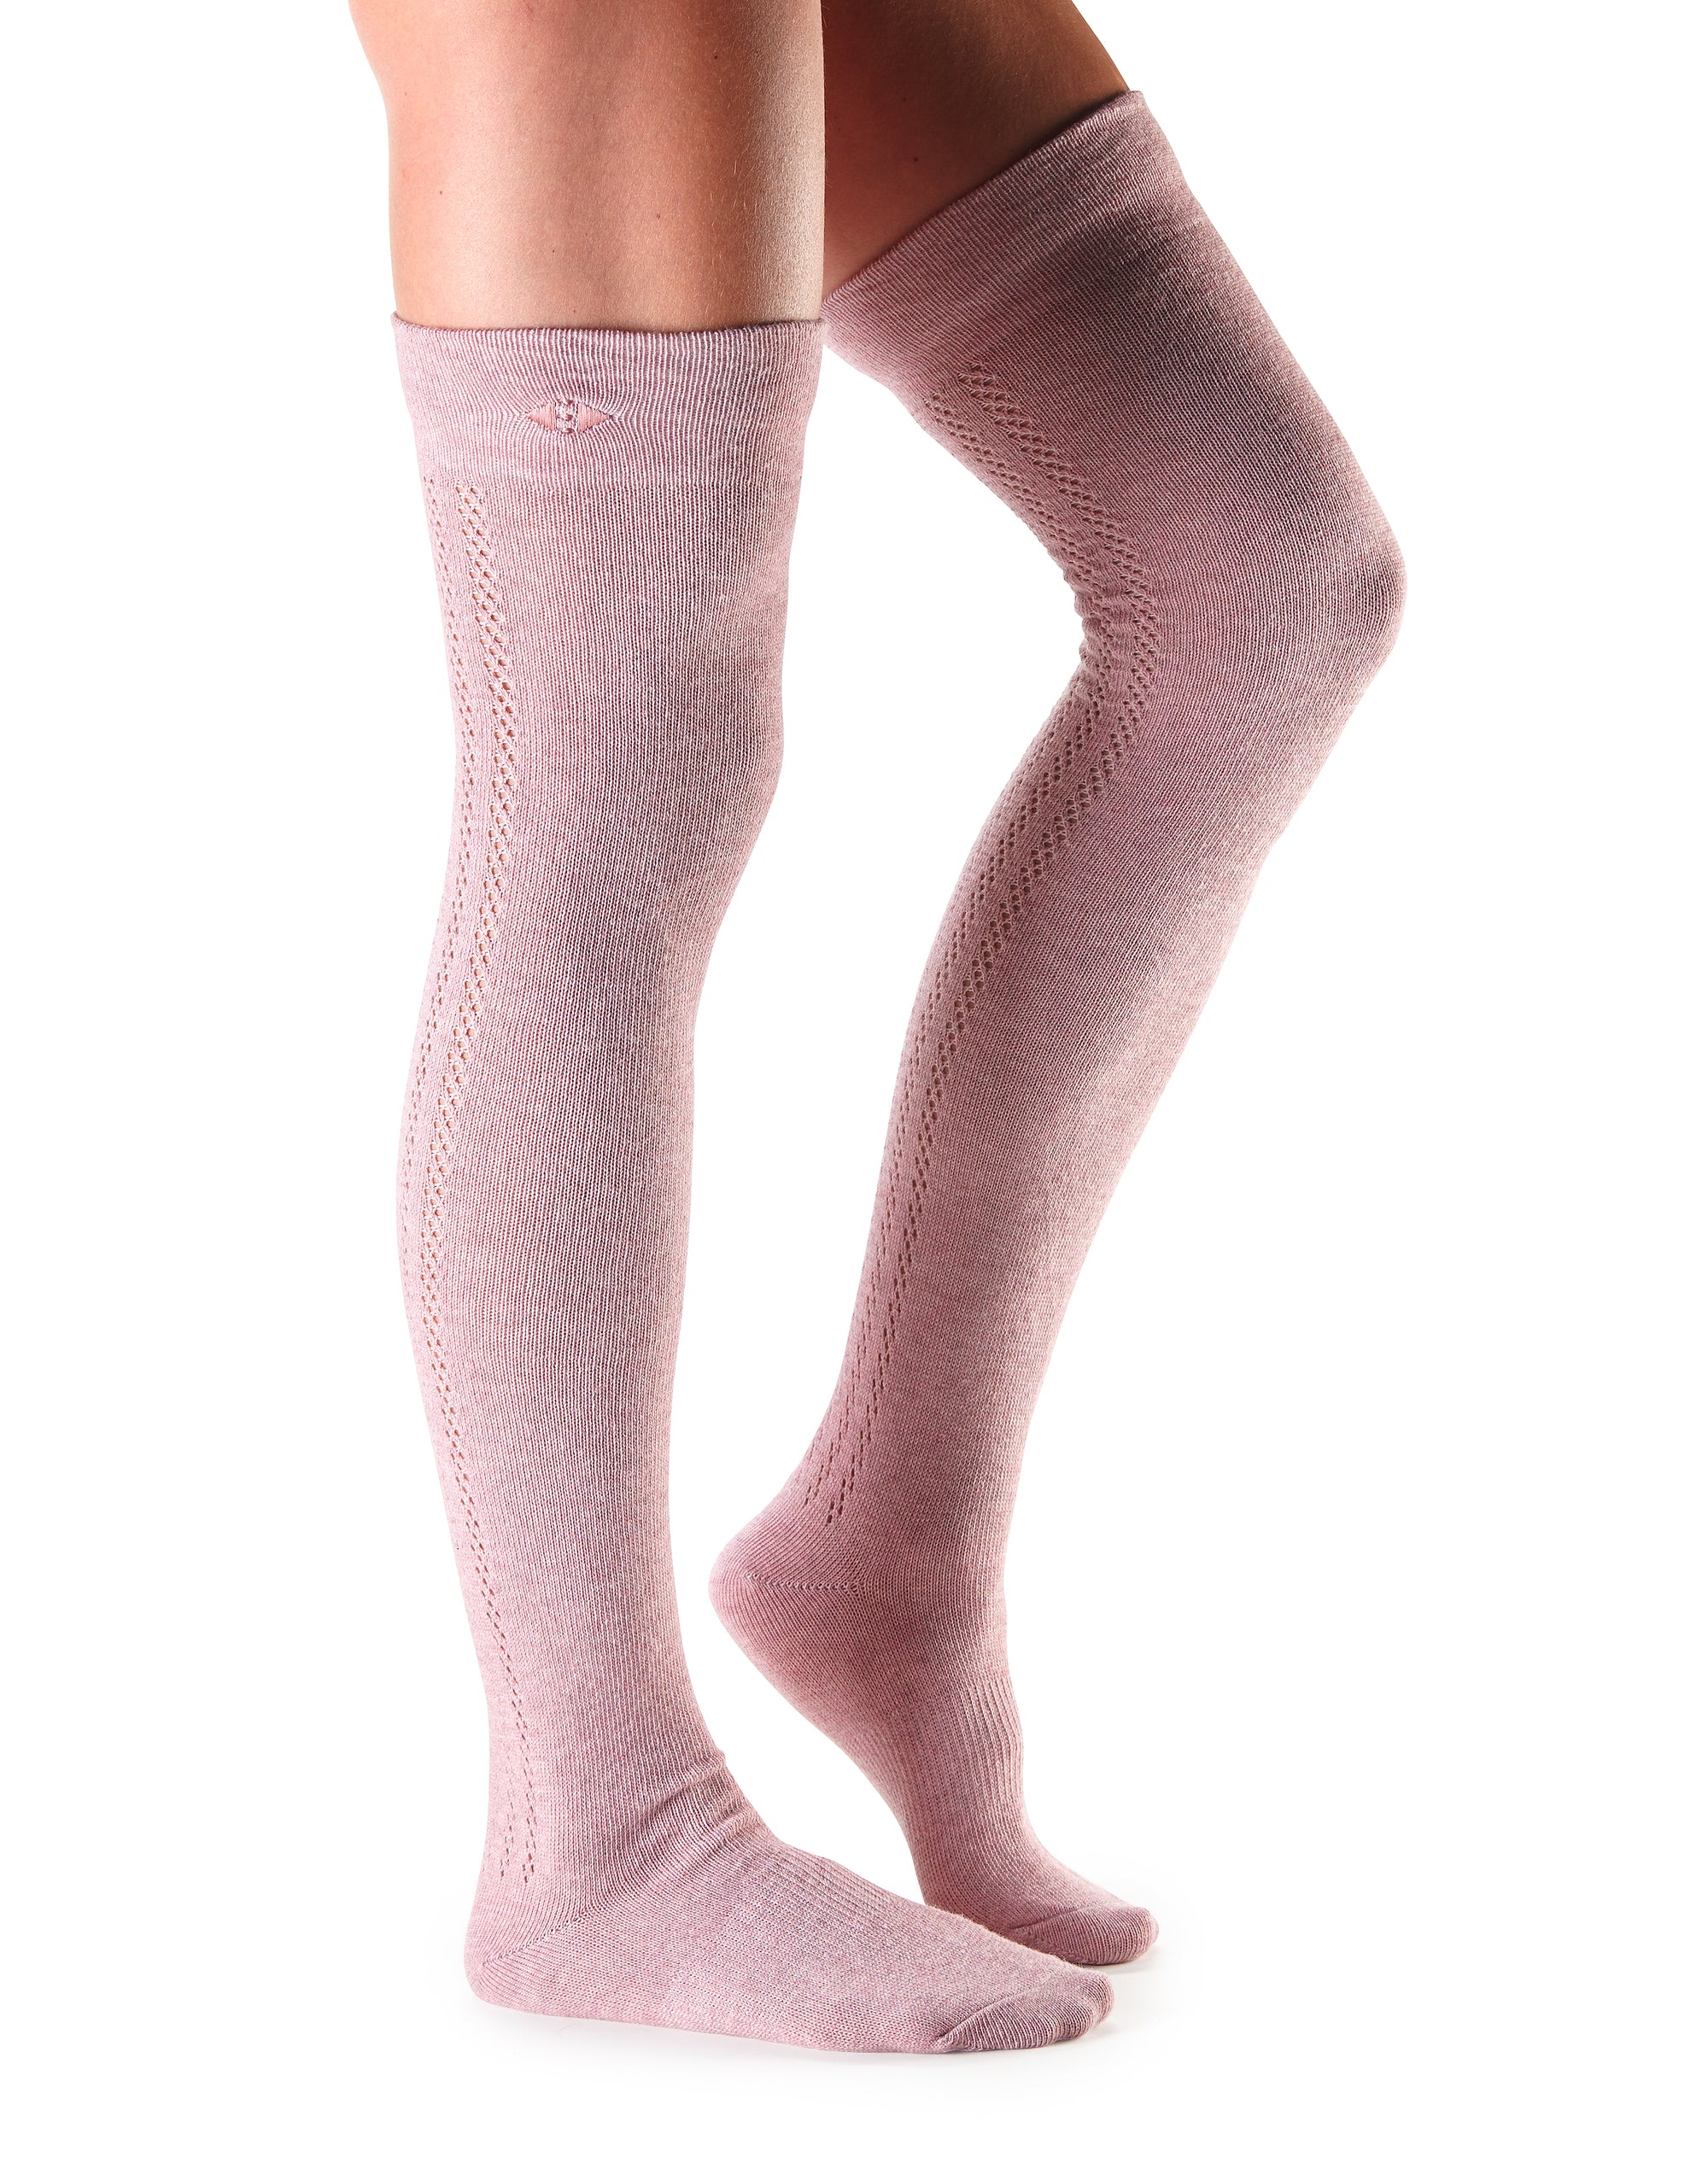 Tavi Noir Socks Hong Kong - T8 Fitness - T8 Fitness - Asia Yoga, Pilates,  Rehab, Fitness Products